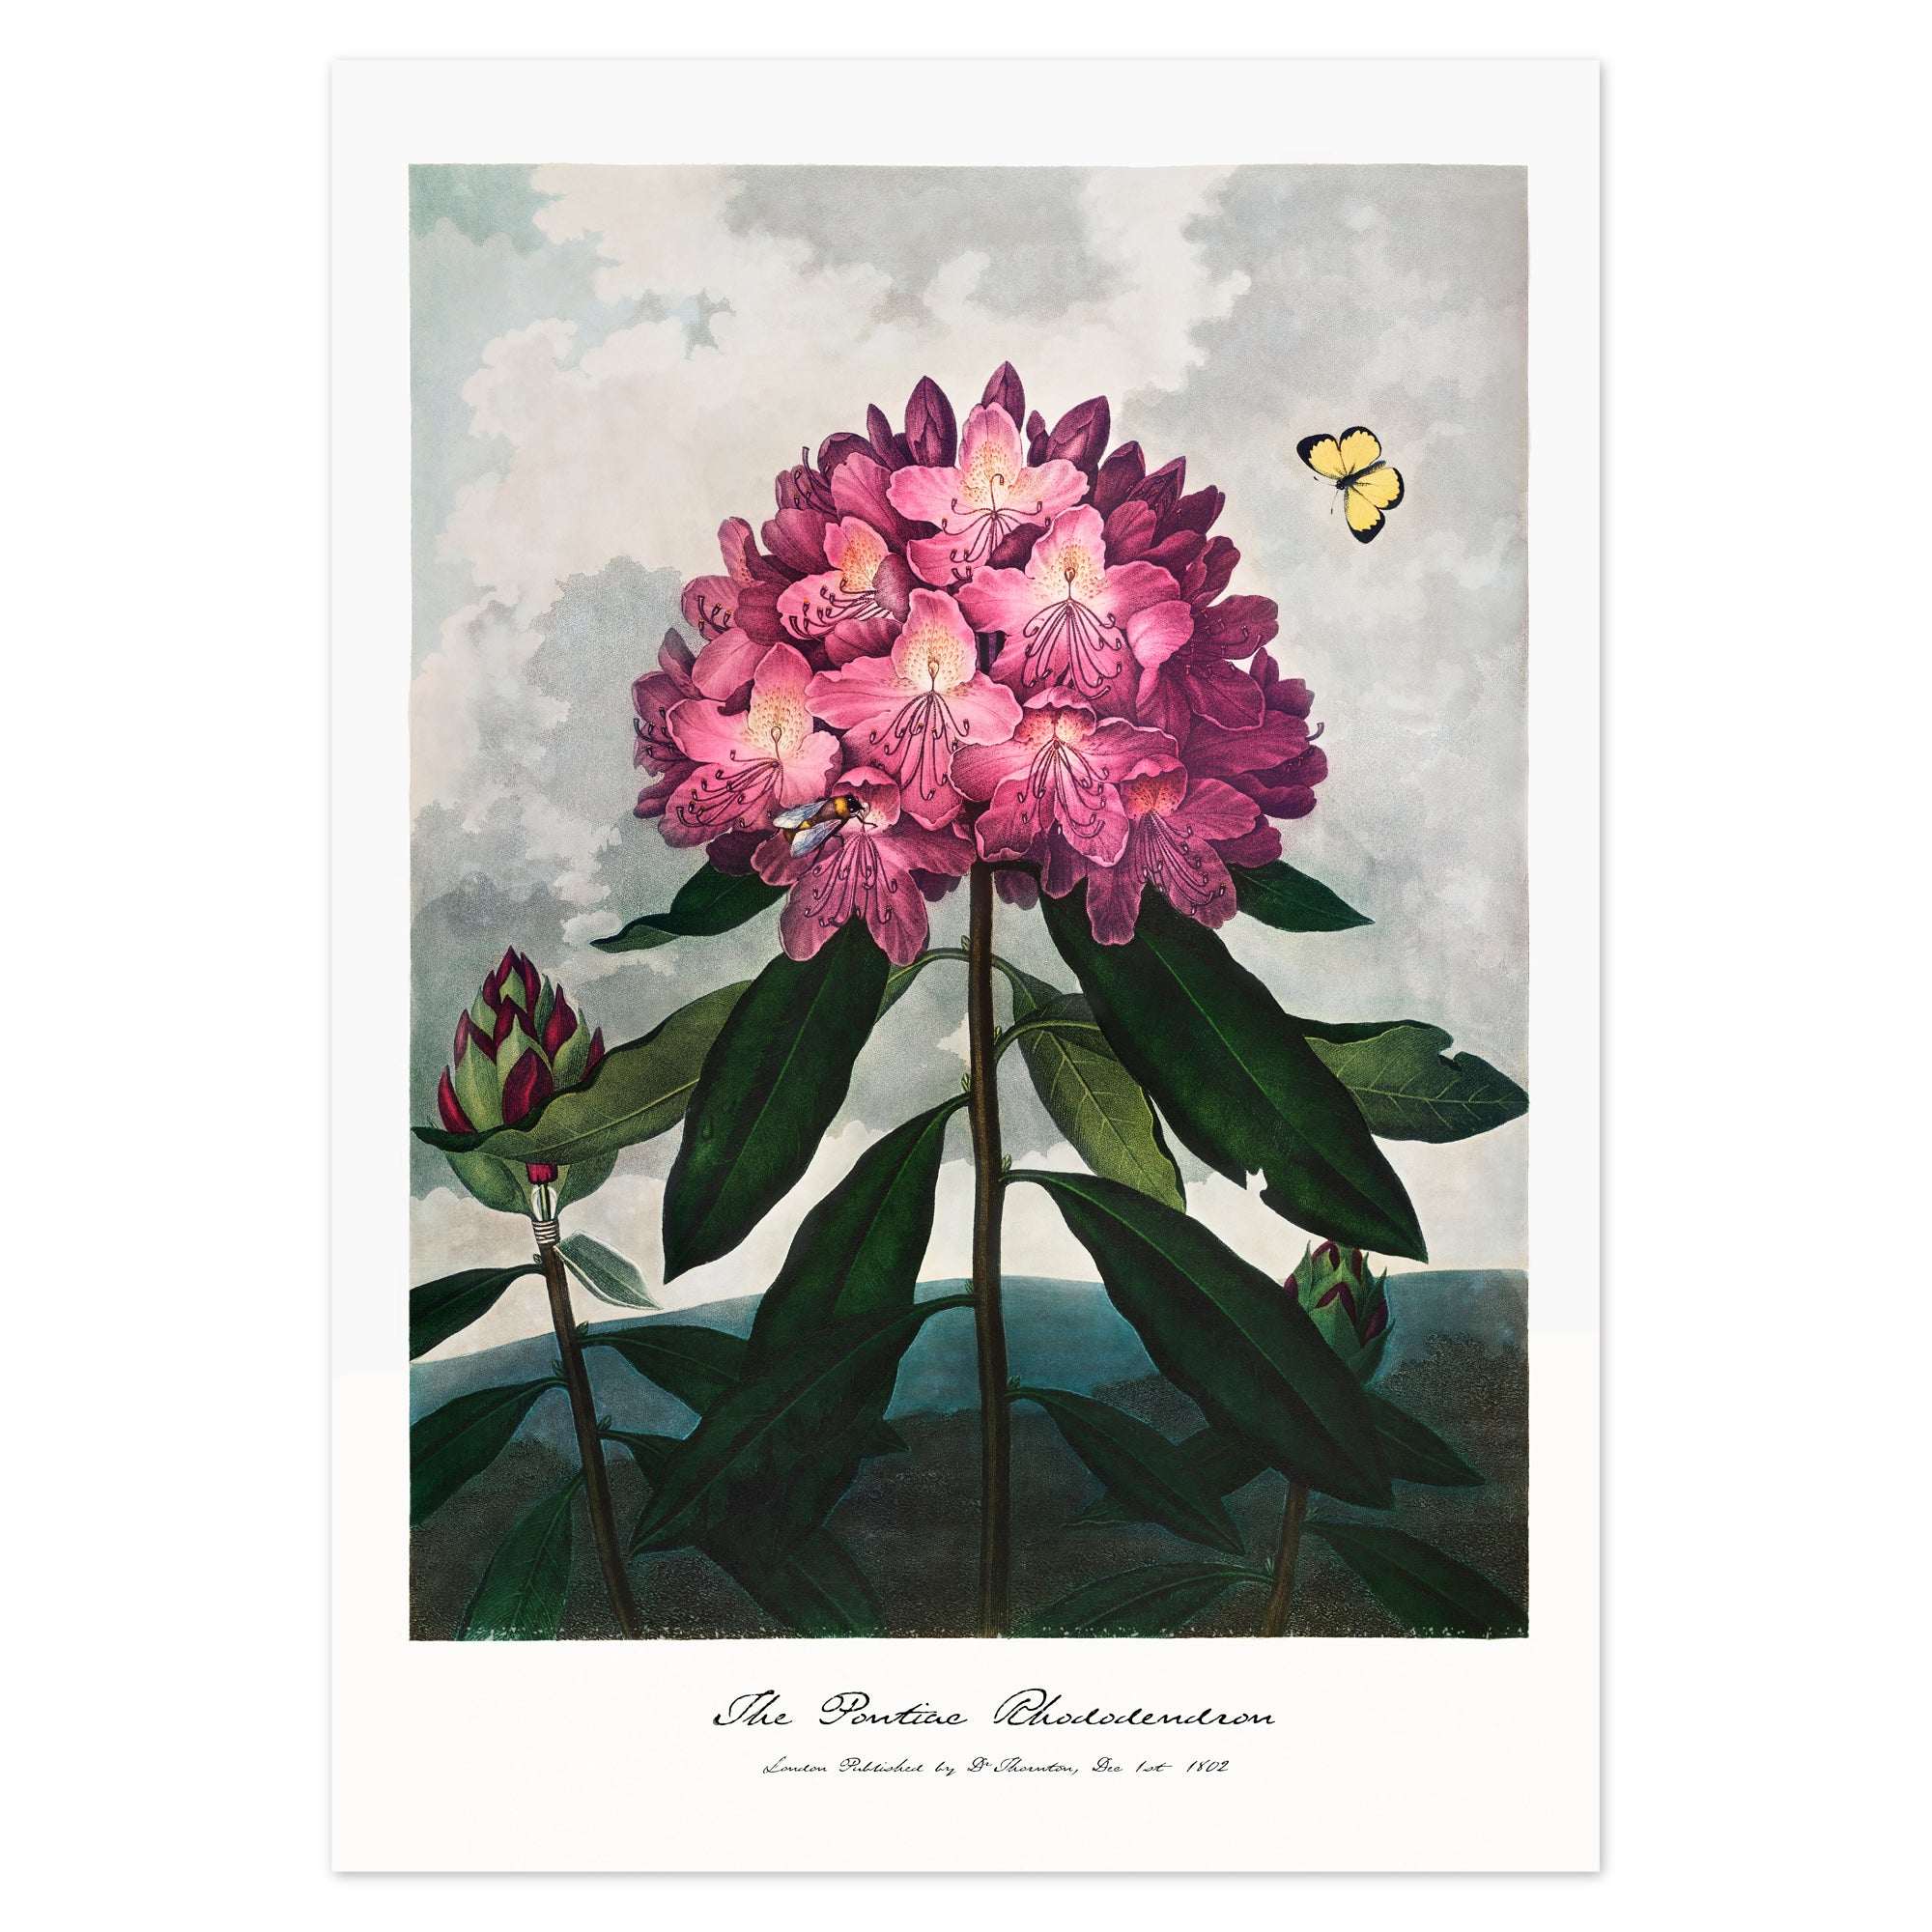 Robert John Thornton Poster - The Pontiac Rhododendron